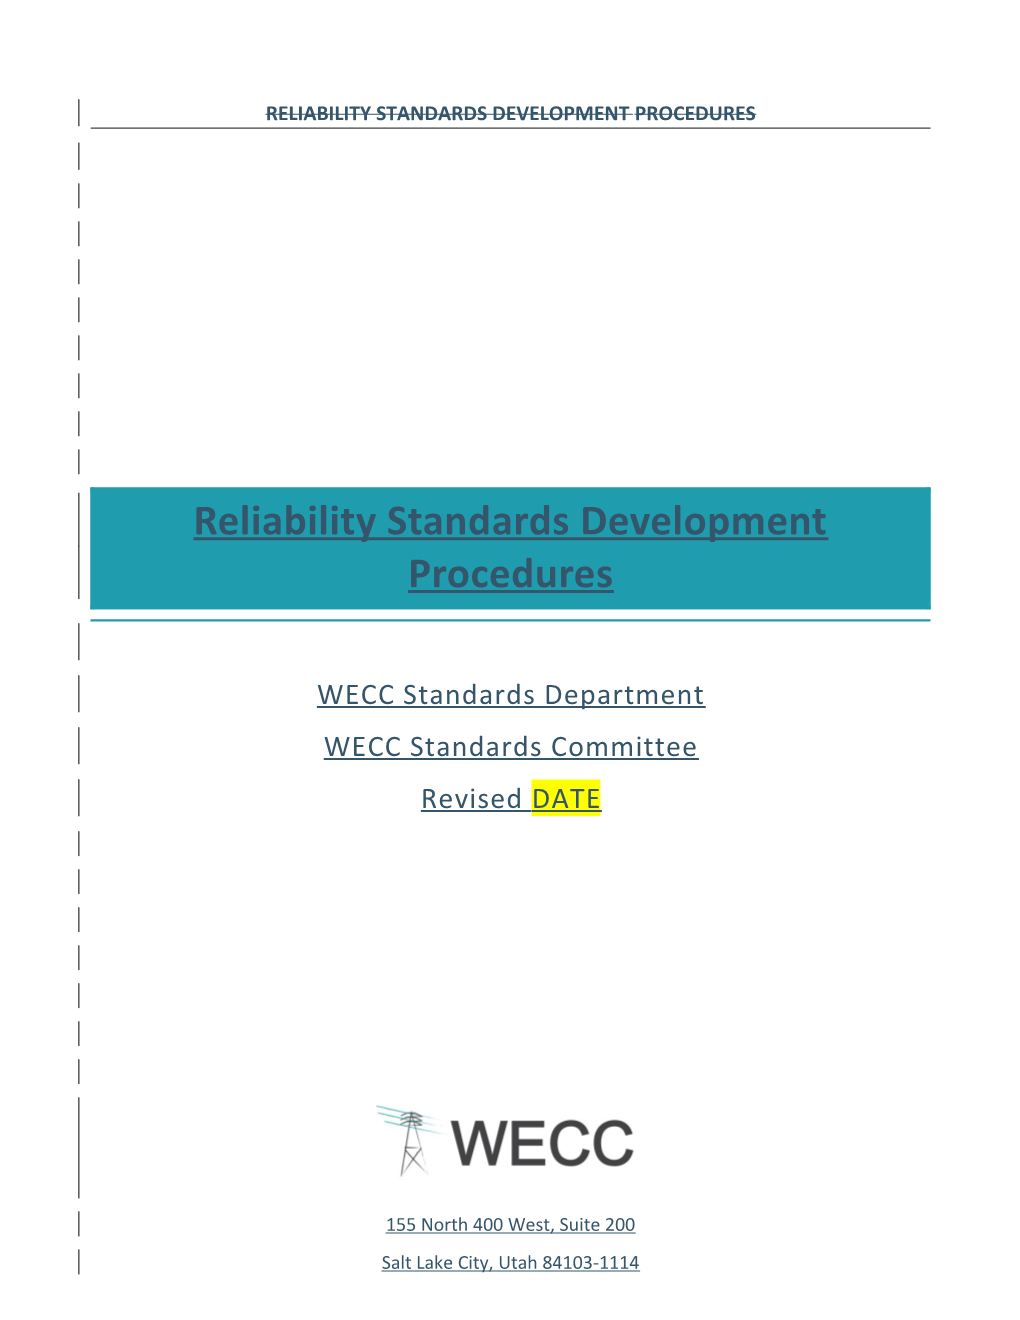 WECC-0117 Posting 1 Reliability Standards Development Procedures FERC Approved 12-24-2014